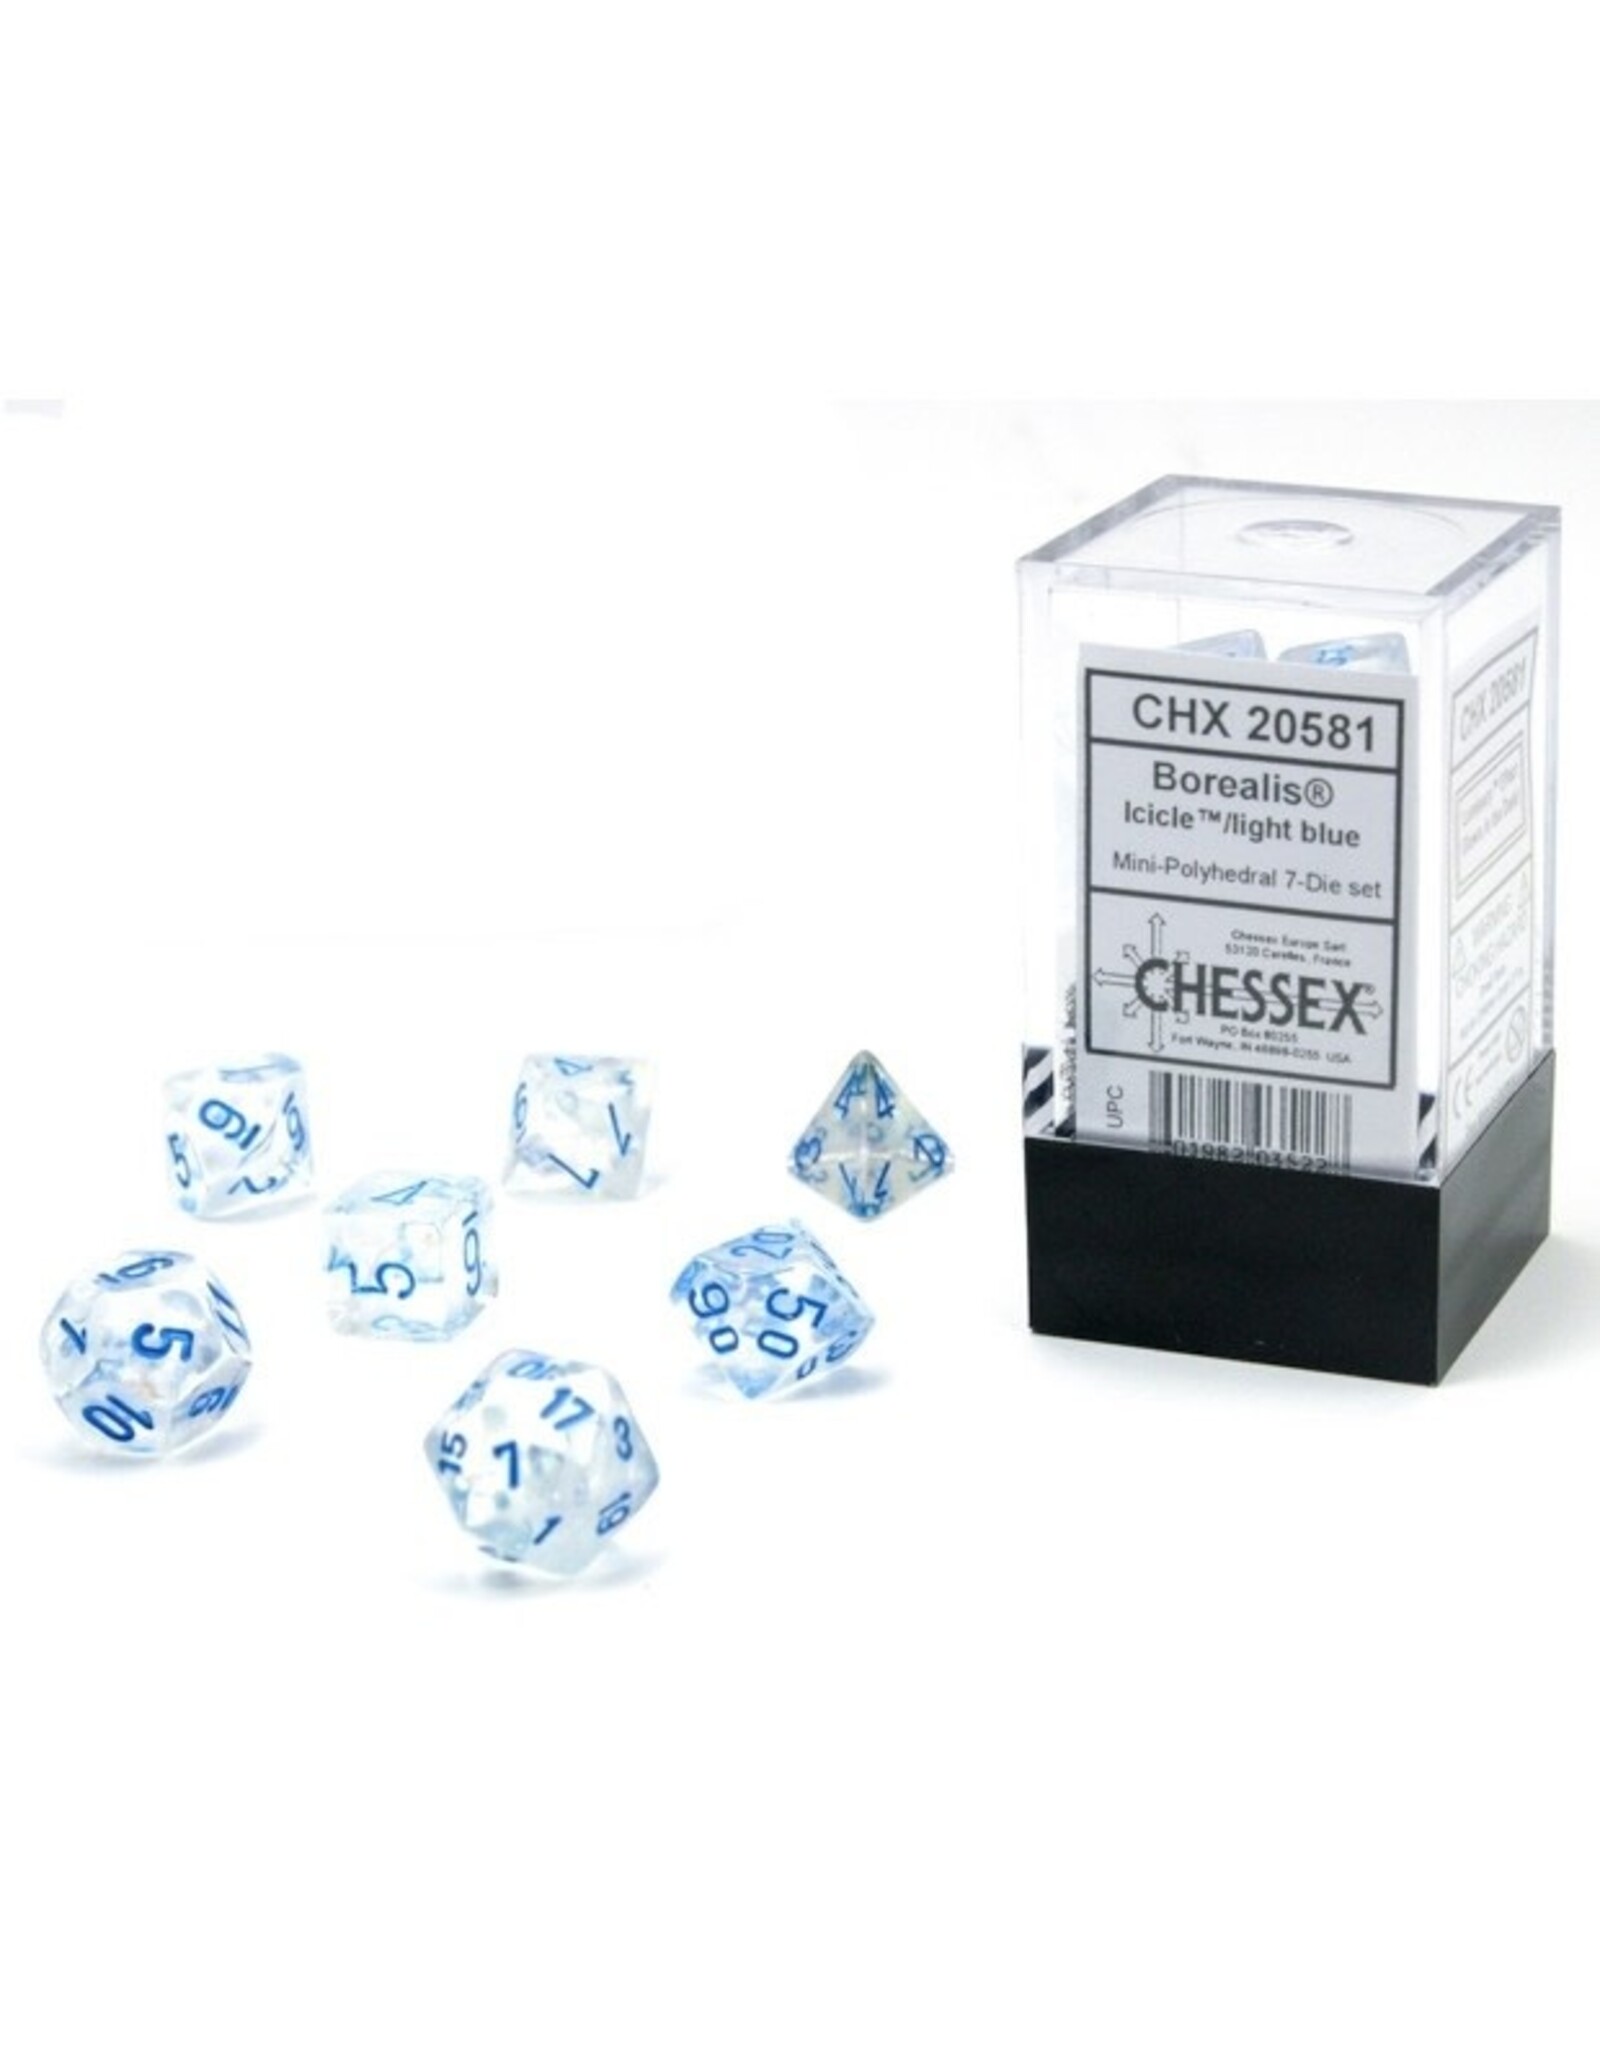 Chessex CHX20581 Borealis: Icicle/light blue (7)